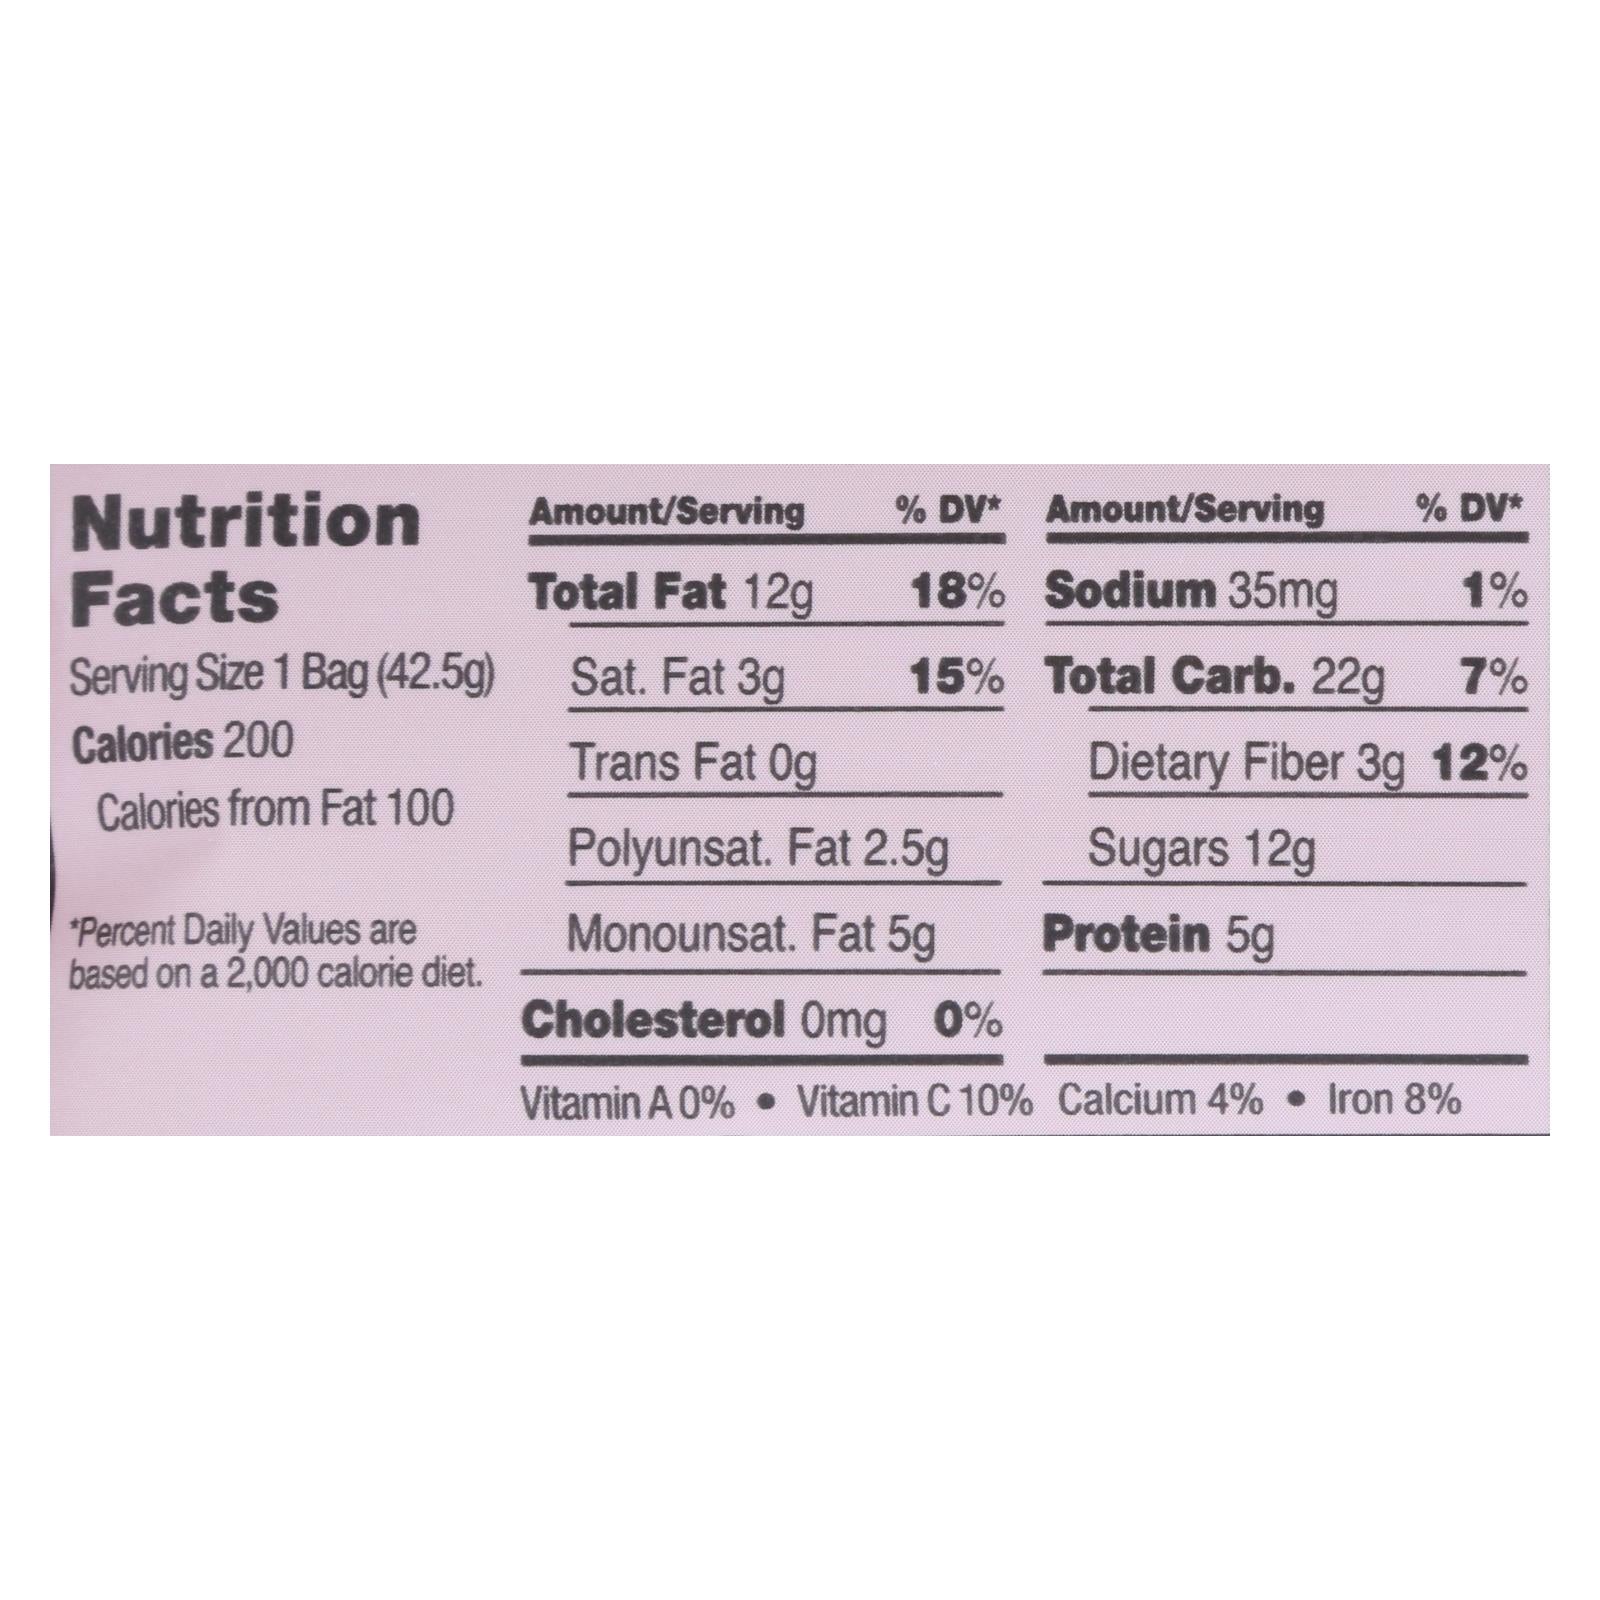 Sahale Raspberry Crumble Cashew Snack Mix  - Case of 9 - 1.5 OZ